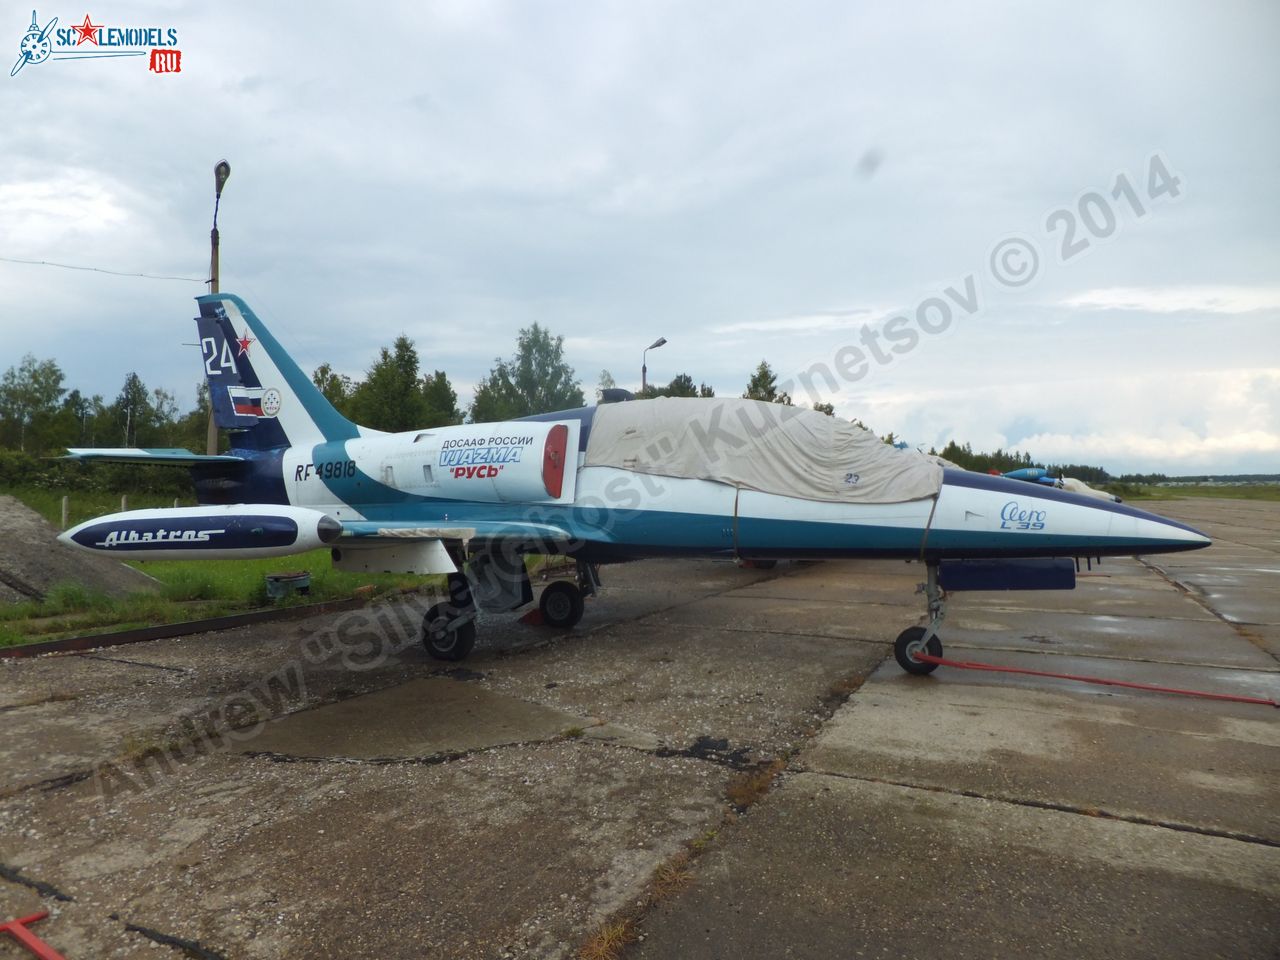 L-39_Albatros_RF-49818_0116.jpg